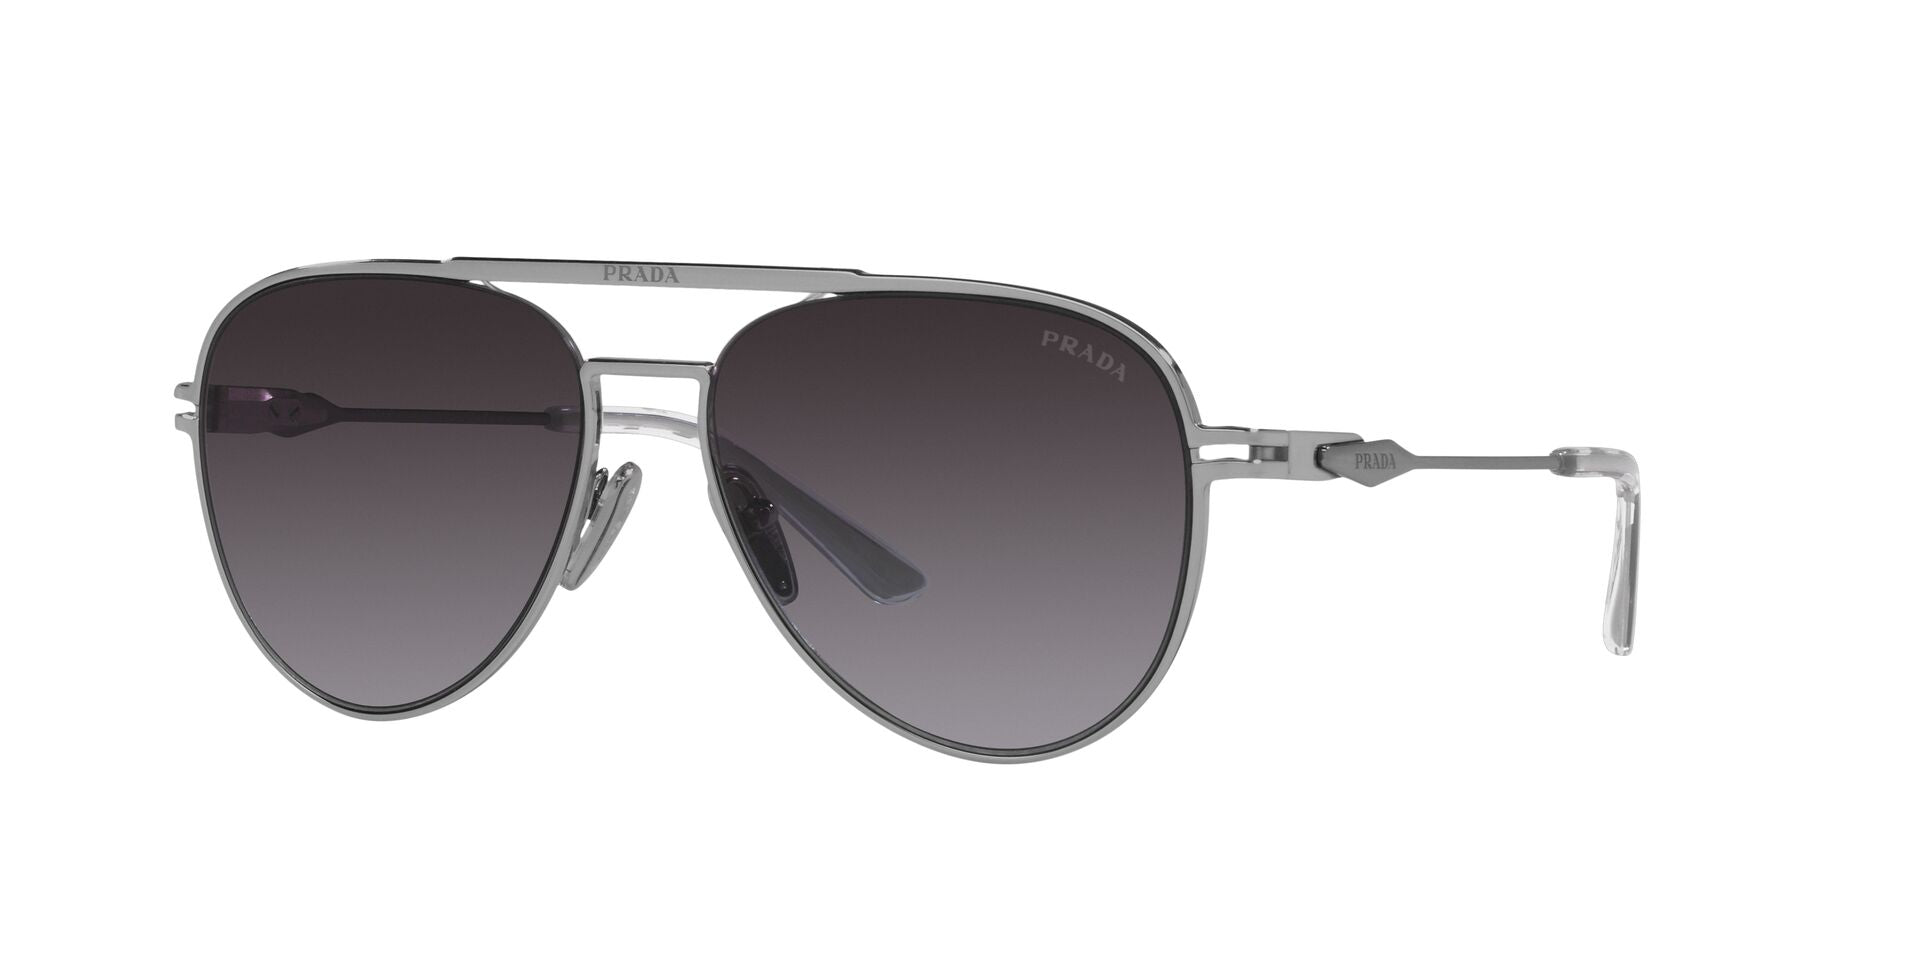 Prada Aviator Sunglasses for Women | Mercari